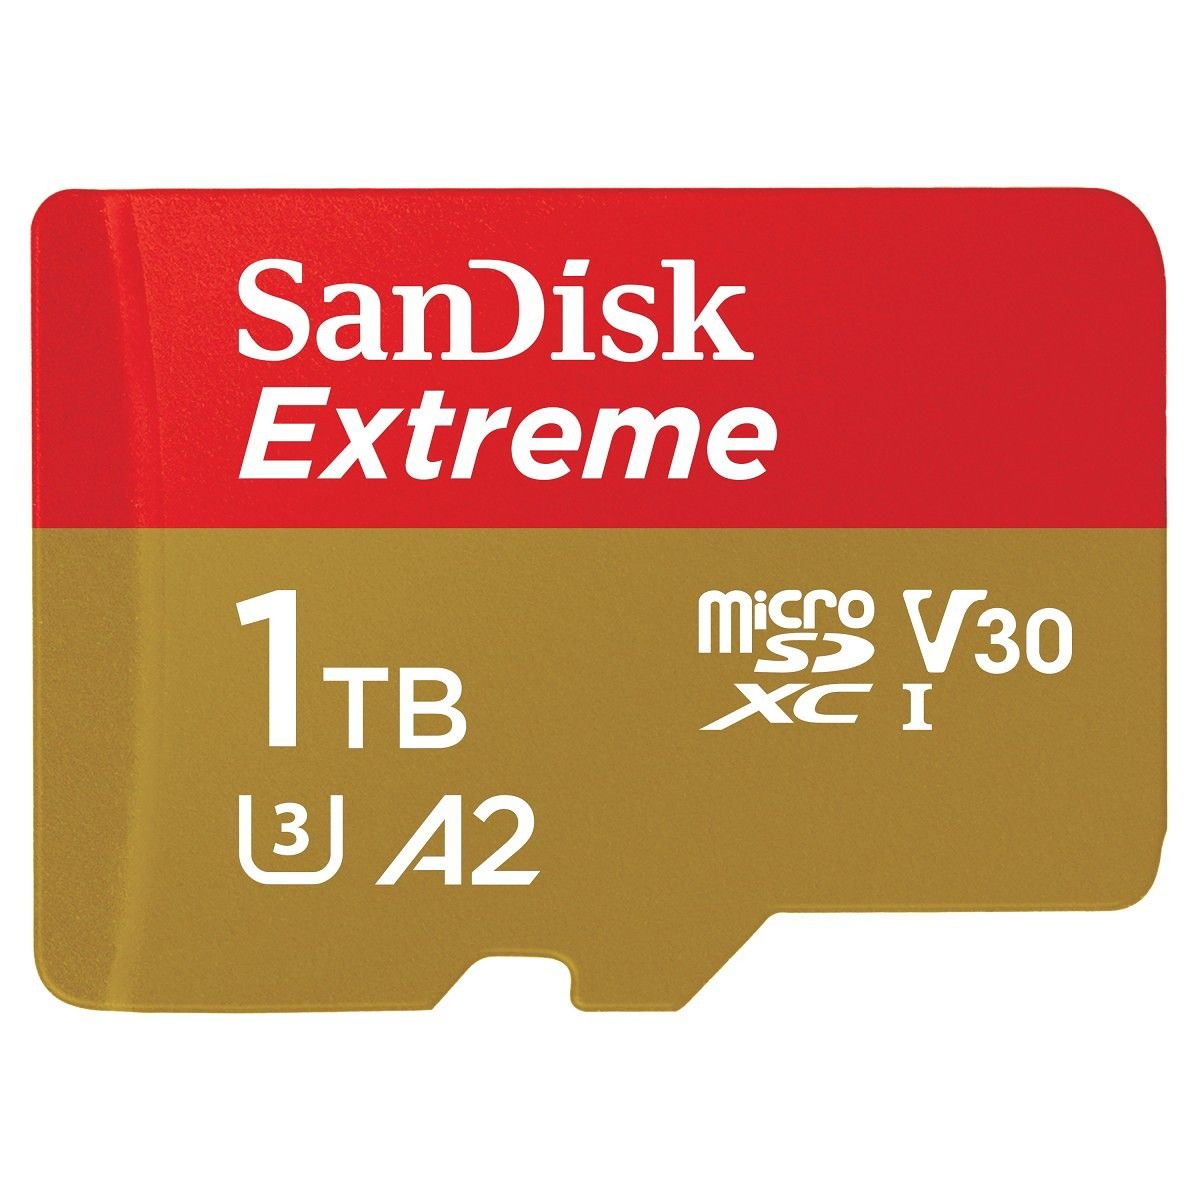 SanDisk Extreme 1TB UHS-1 microSD card